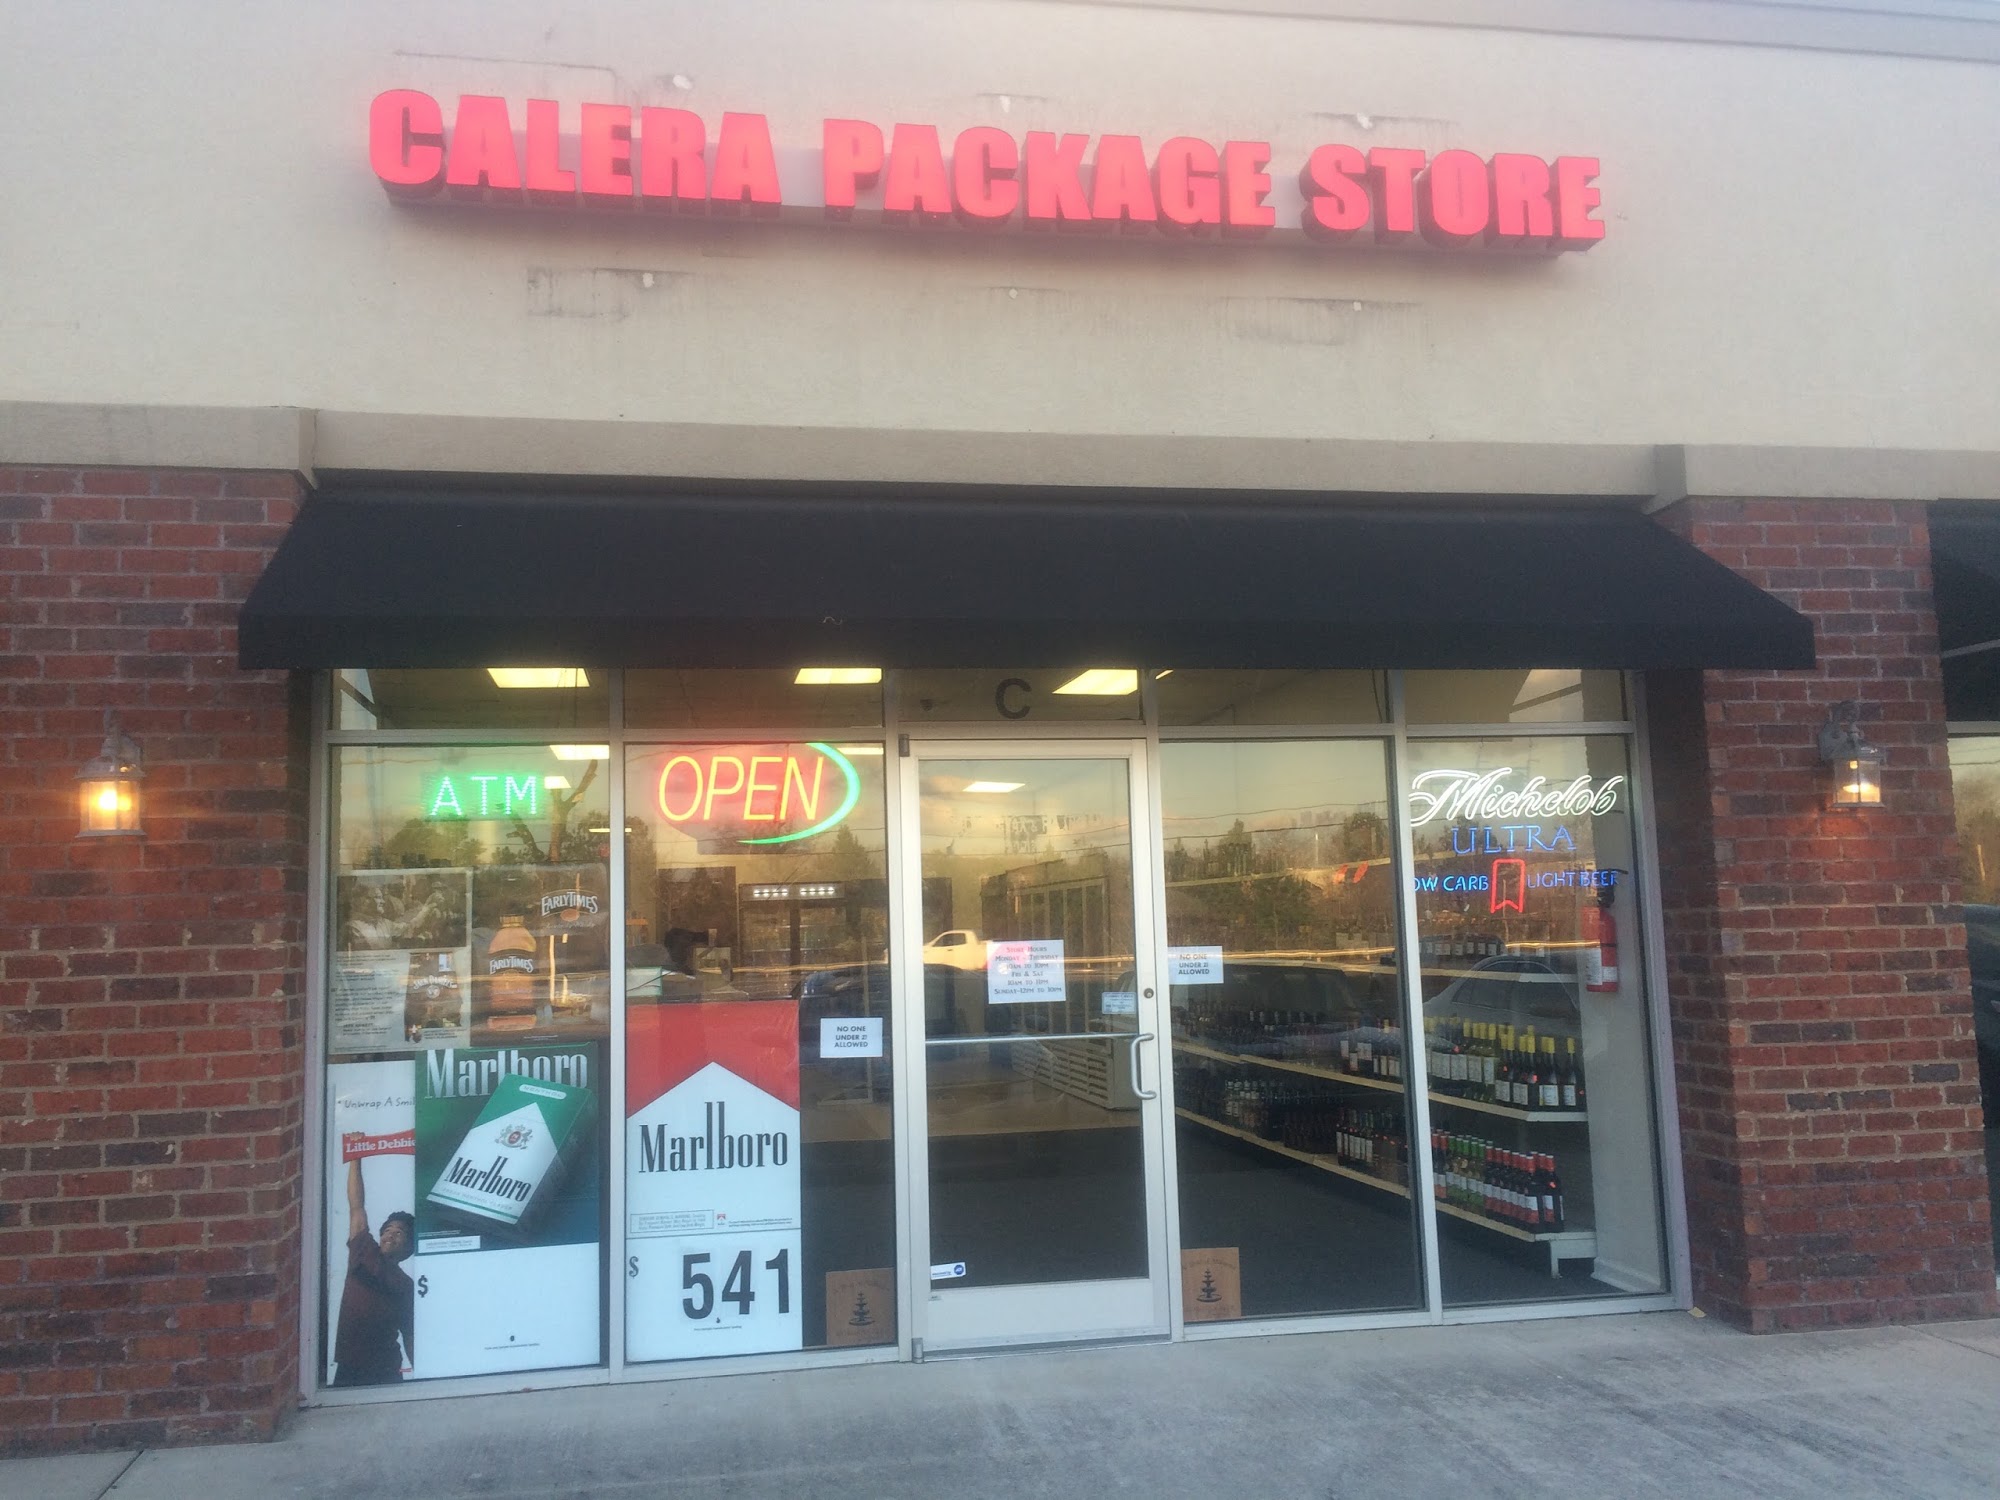 Calera Package Store